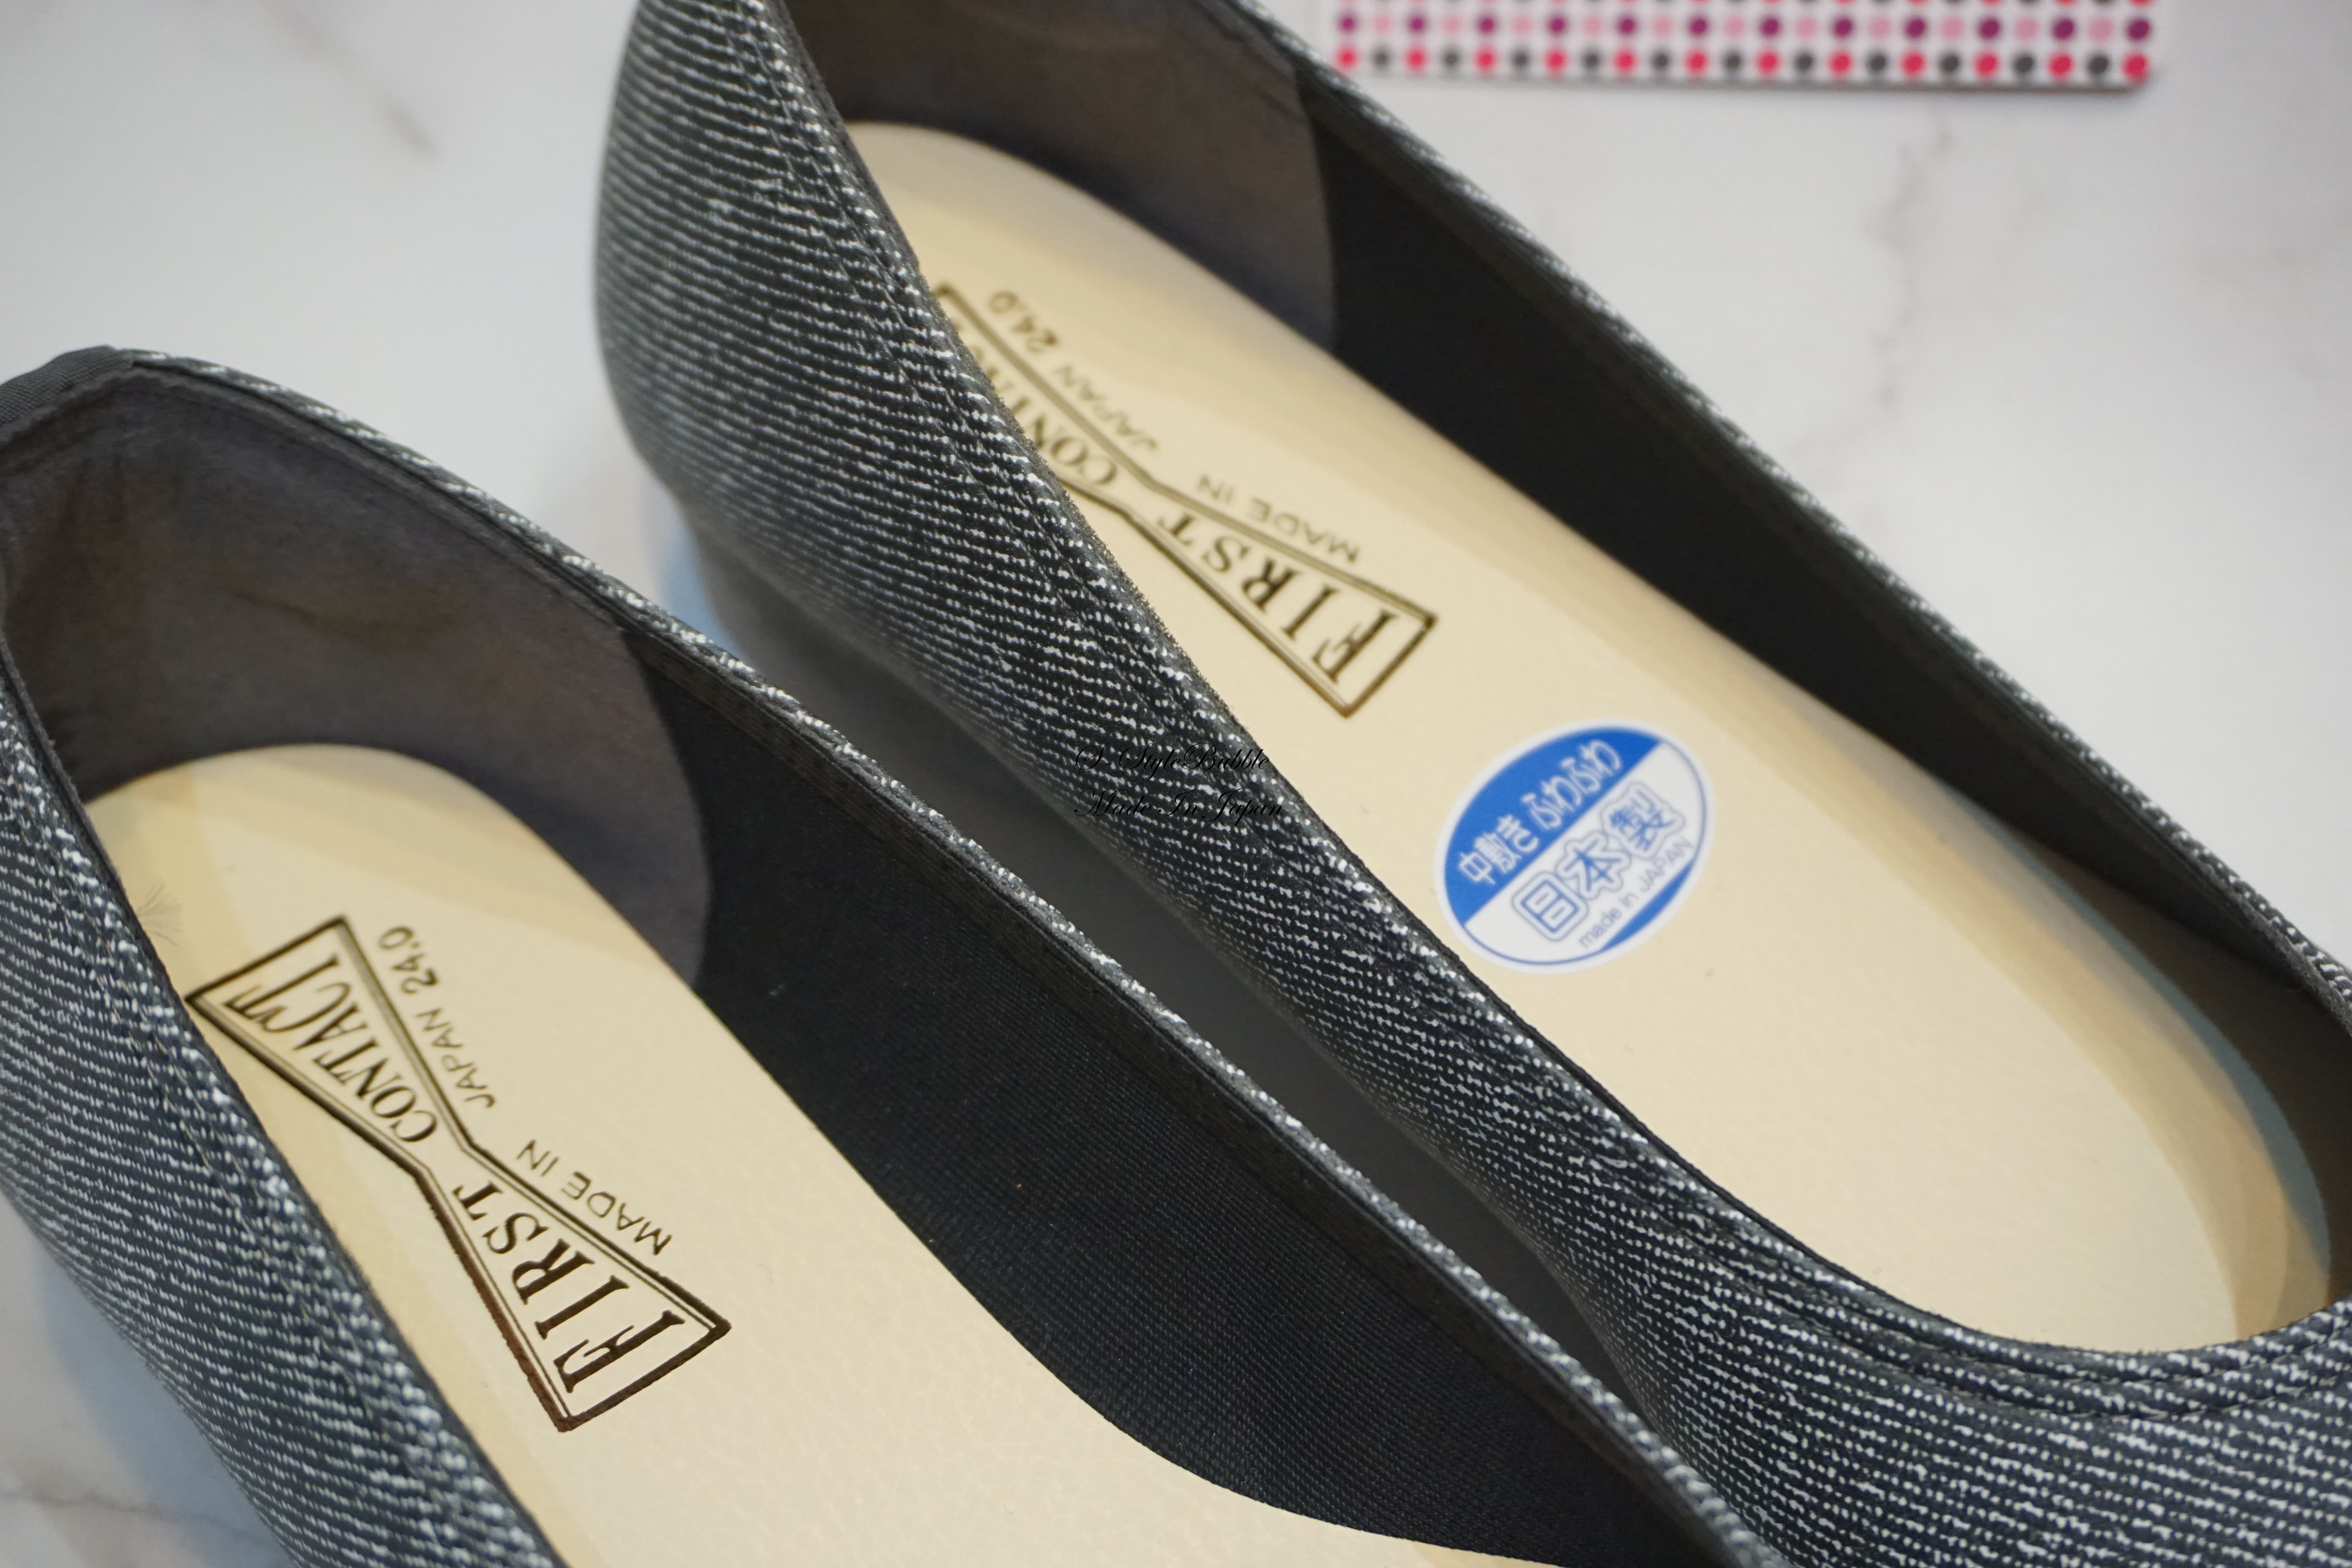 Japan Casual Flats Soles-SOFT CONTACT-BE-JP/TW Size-1: 230-偉豐鞋 WELL SHOE HK-Well Shoe-偉豐鞋-偉豐網-荃灣鞋店-Functional shoes-Hong Kong Tsuen Wan Shoe Store-Tai Wan Shoe-Japan Shoe-高品質功能鞋-台灣進口鞋-日本進口鞋-High-quality shoes-鞋類配件-荃灣進口鞋-香港鞋店-優質鞋類產品-水靴-帆布鞋-廚師鞋-香港鞋品牌-Hong Kong Shoes brand-長者鞋-Hong Kong Rain Boots-Kitchen shoes-Cruthes-Slipper-Well Shoe Hong Kong-Anello-Arriba-休閒鞋-舒適鞋-健康鞋-皮鞋-Healthy shoes-Leather shoes-Hiking shoes